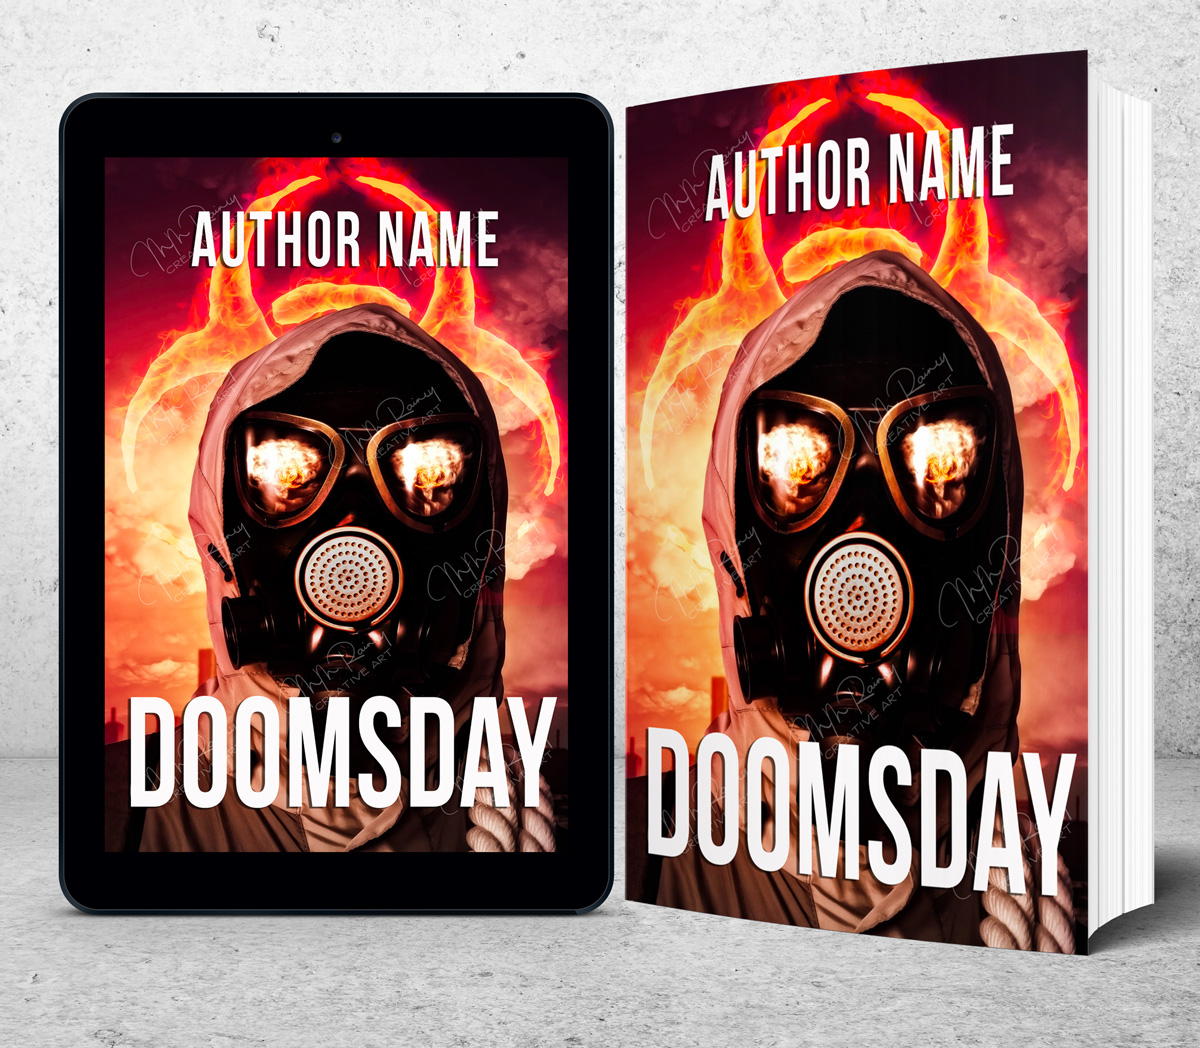 doomsday book novel